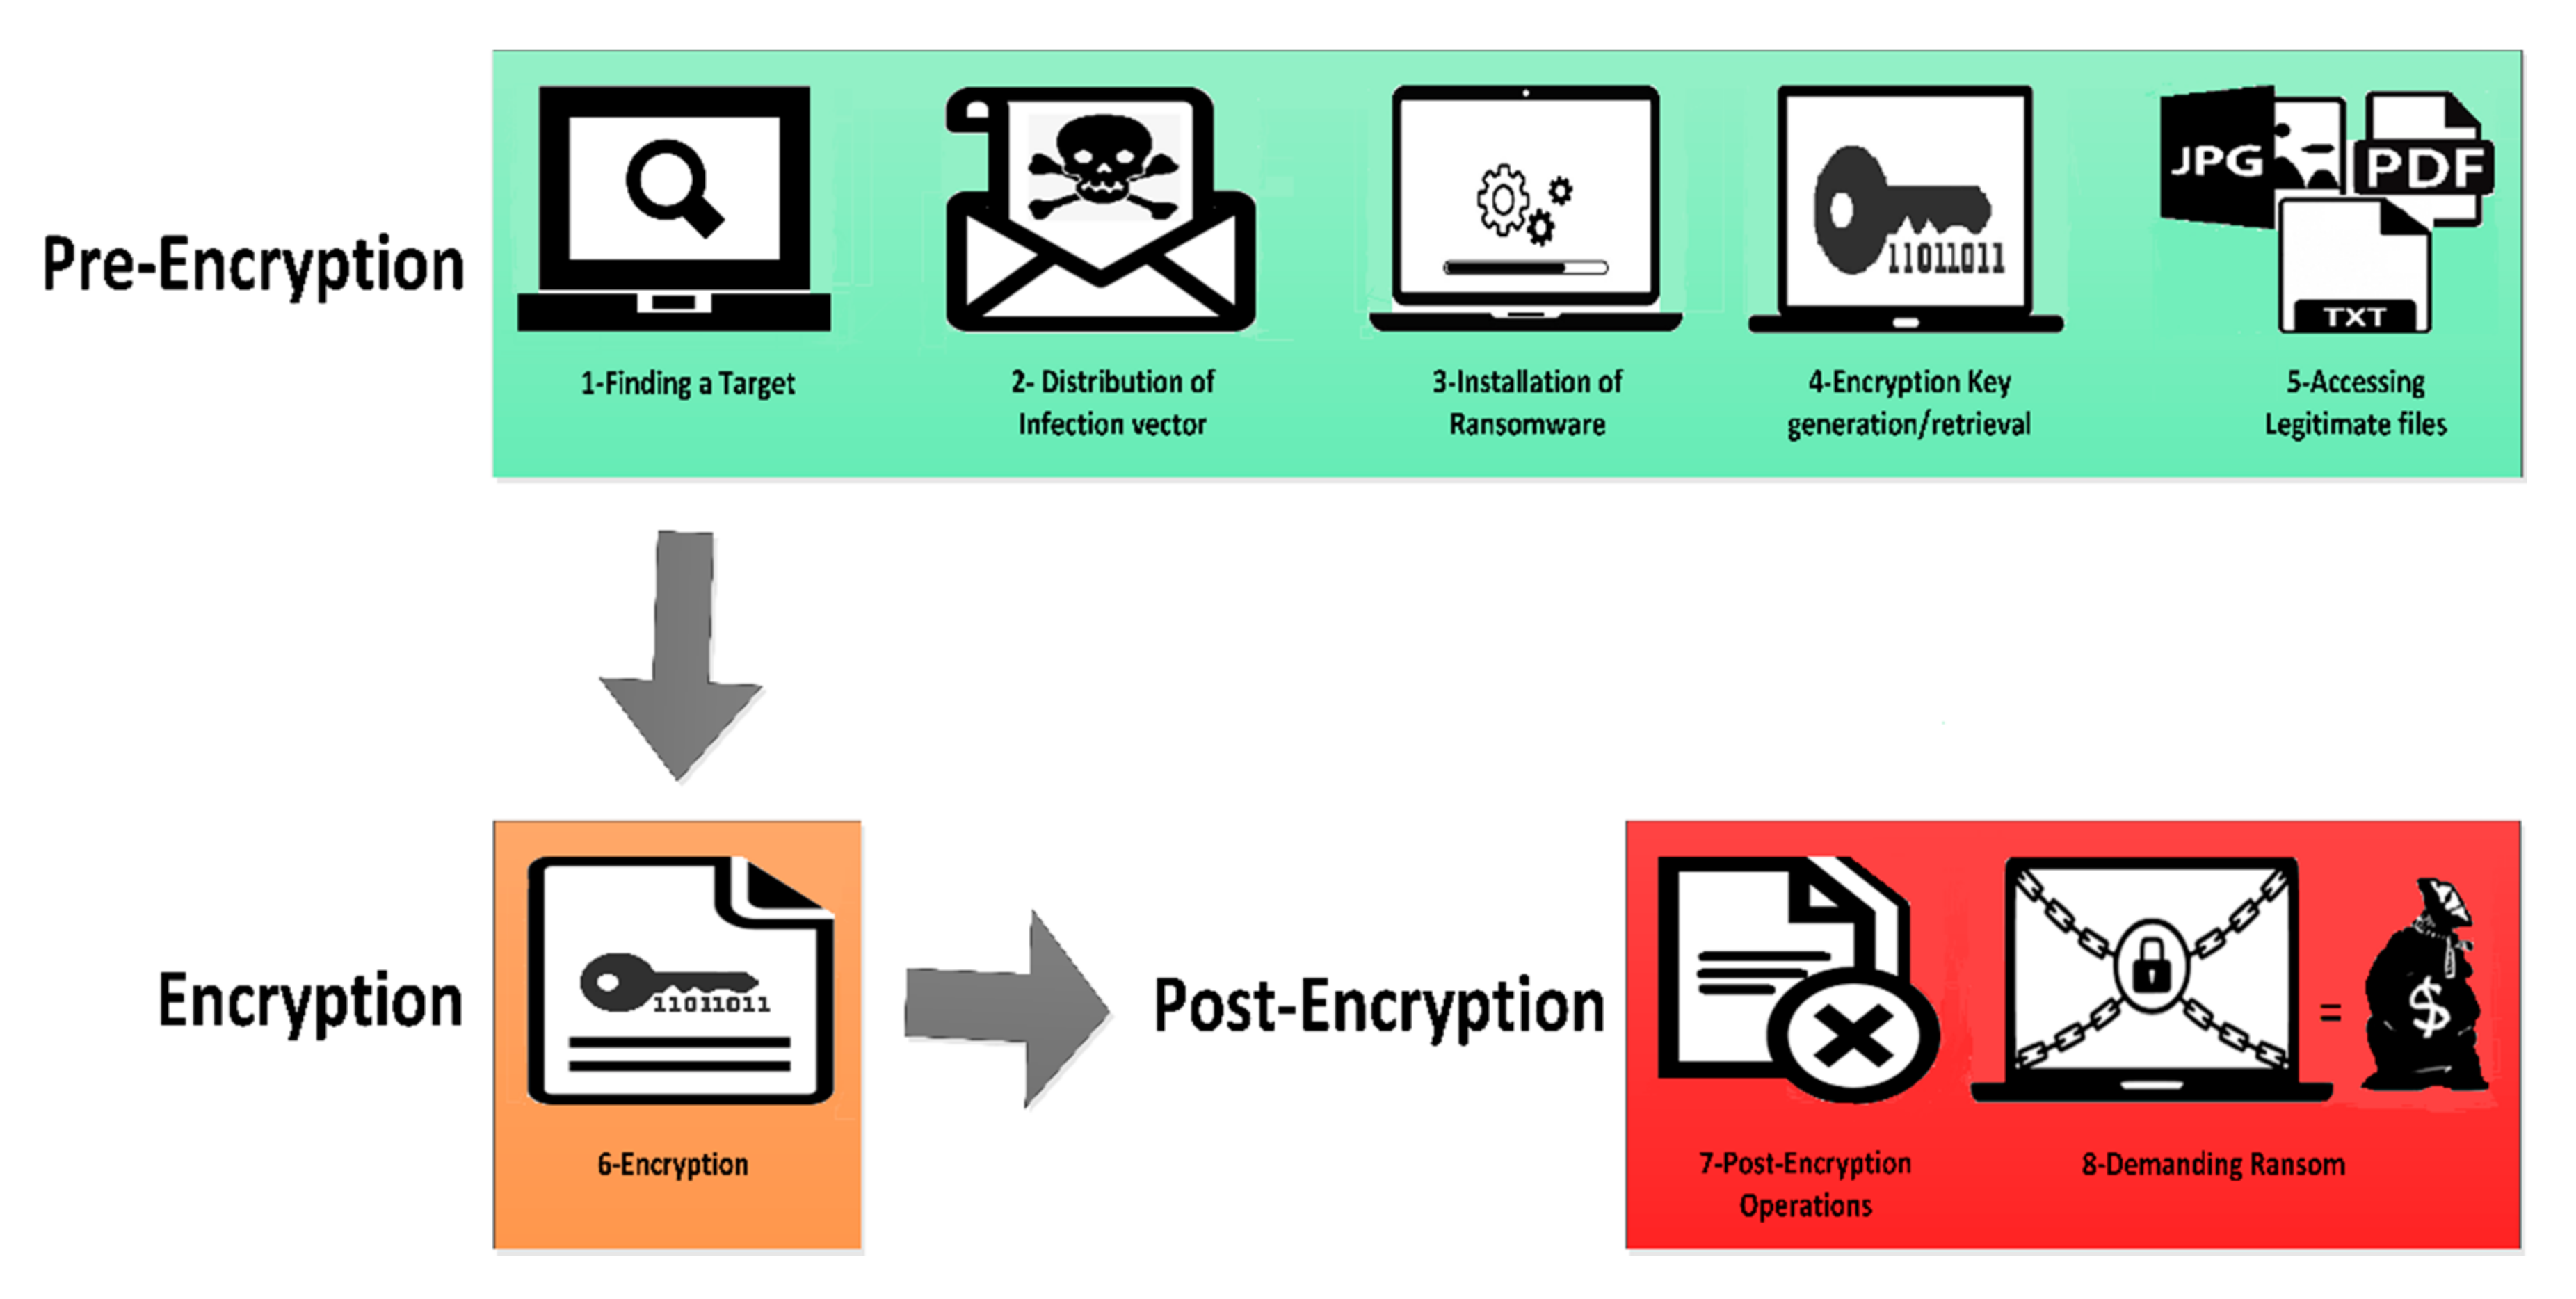 PDF] Analysing web-based malware behaviour through client honeypots